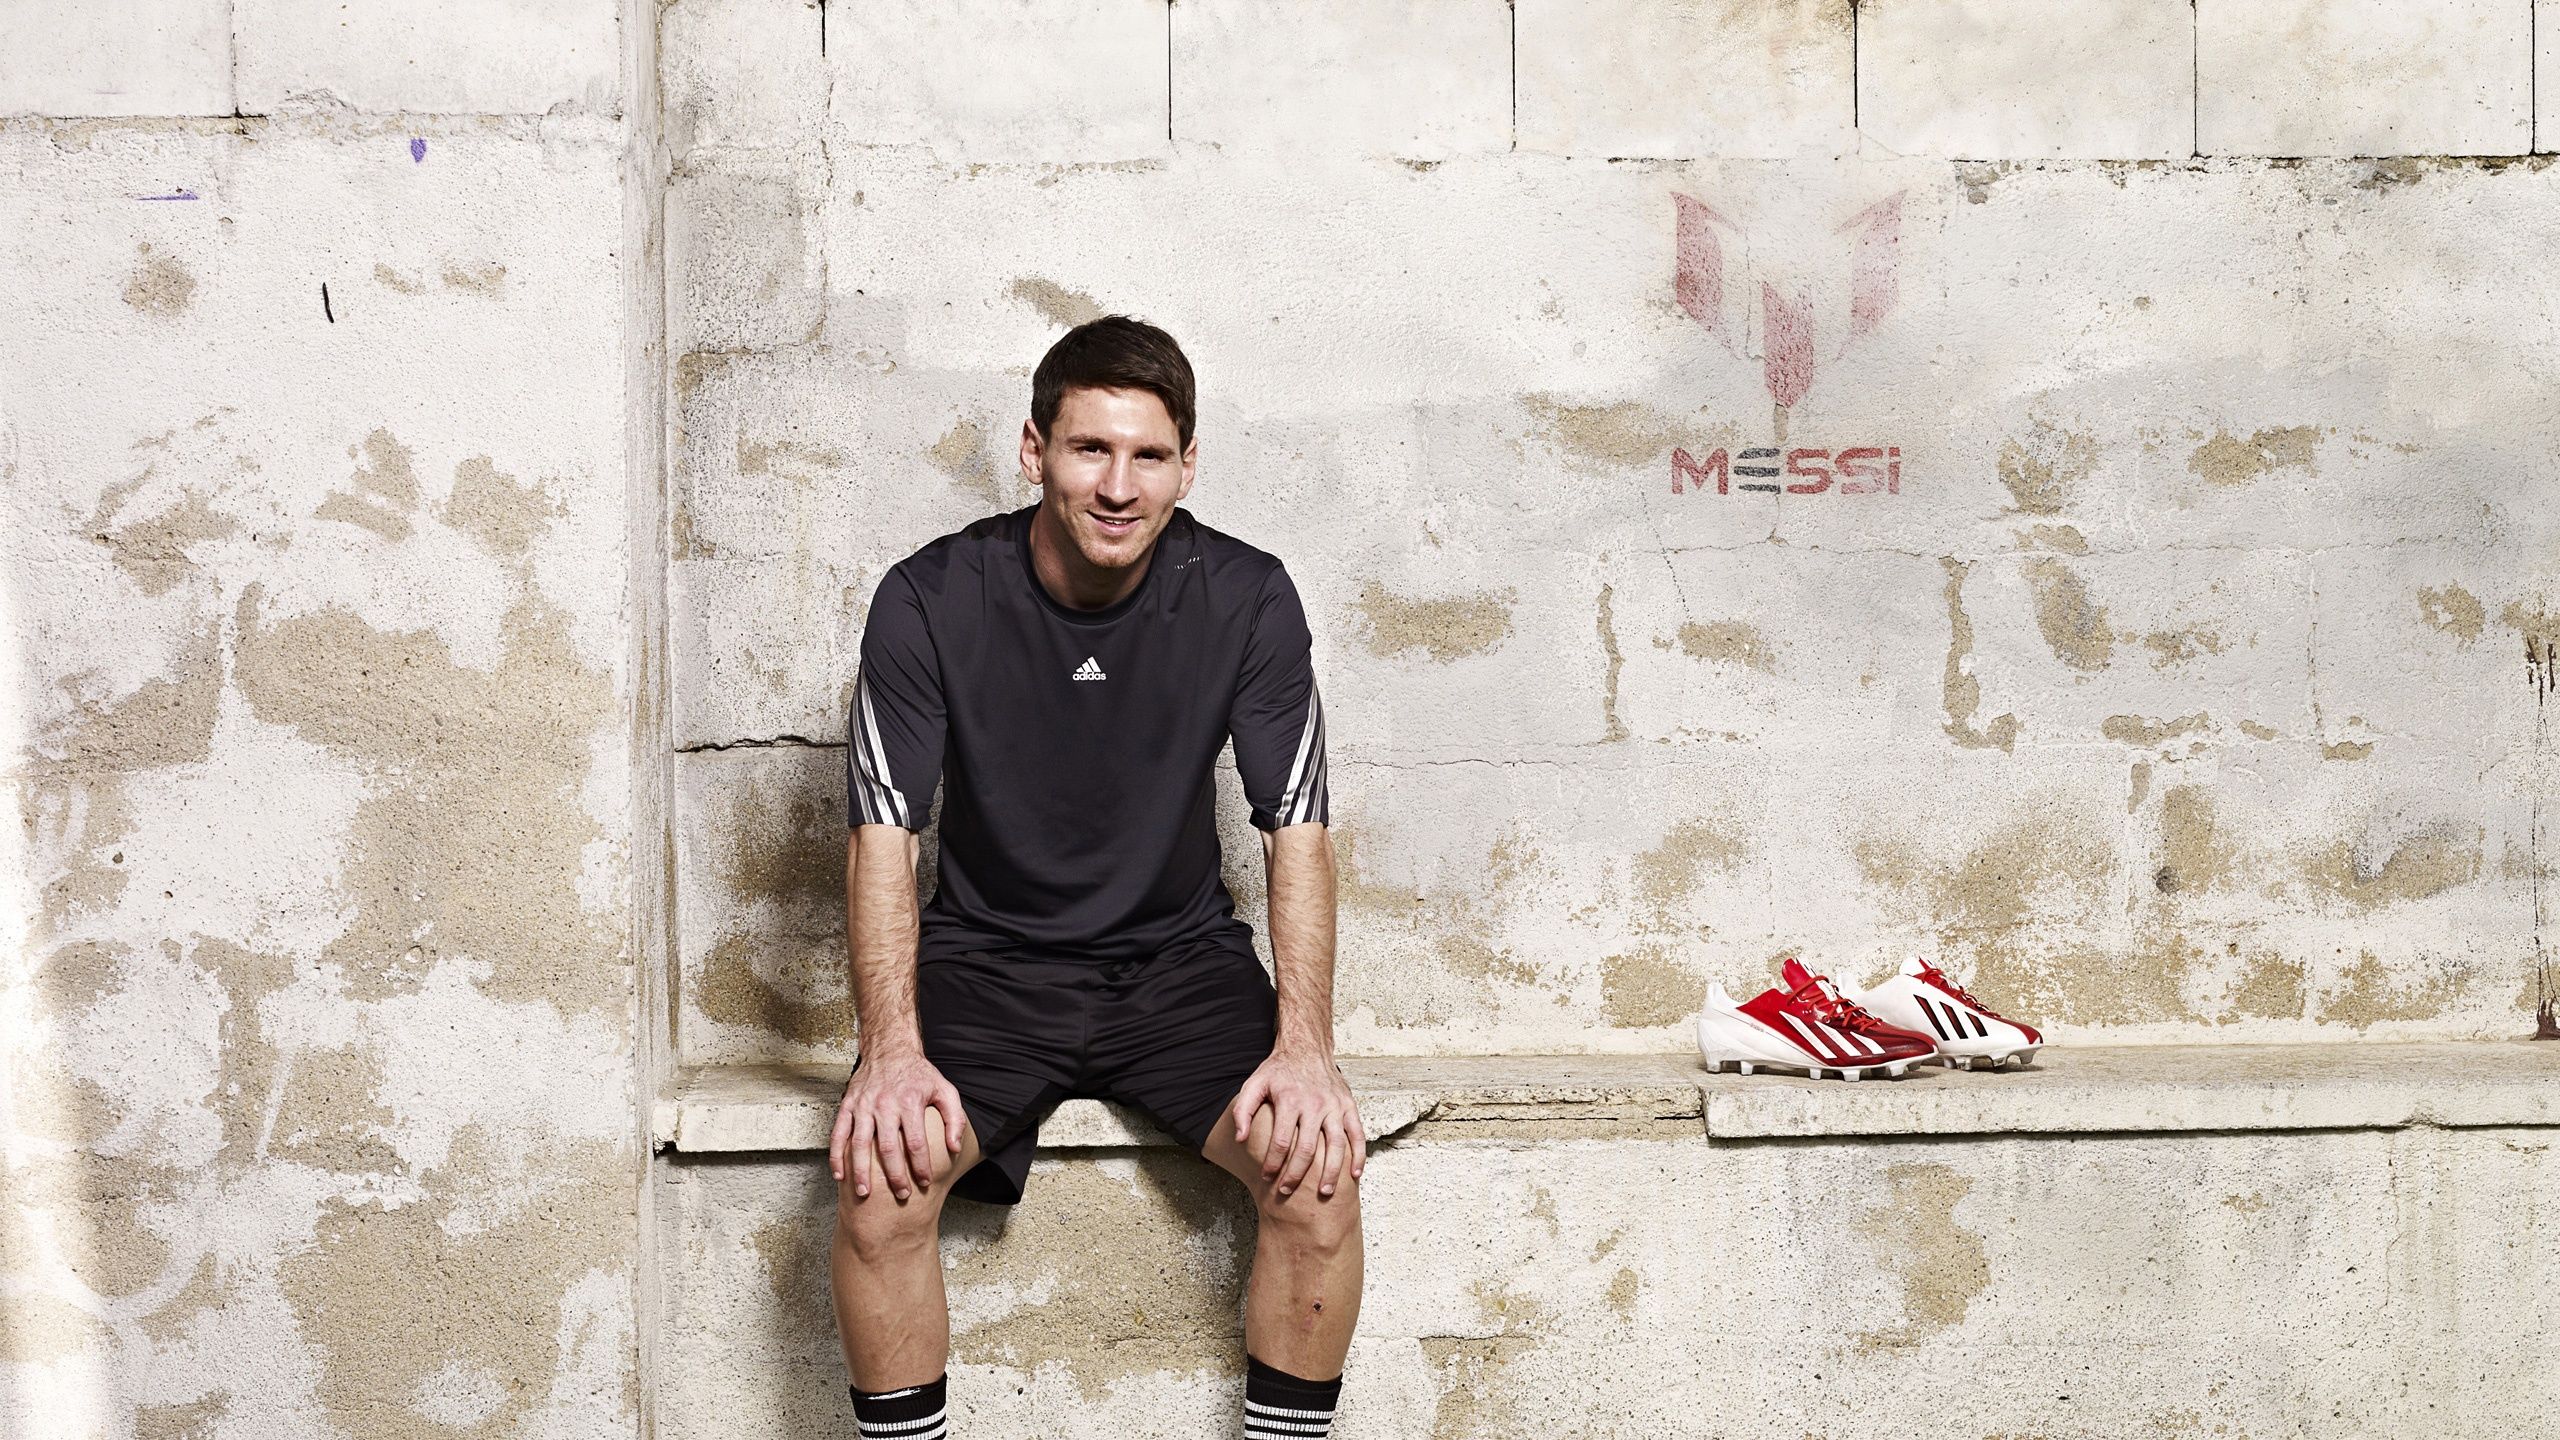 Lionel Messi Argentine footballer Wallpaper in jpg format for free download